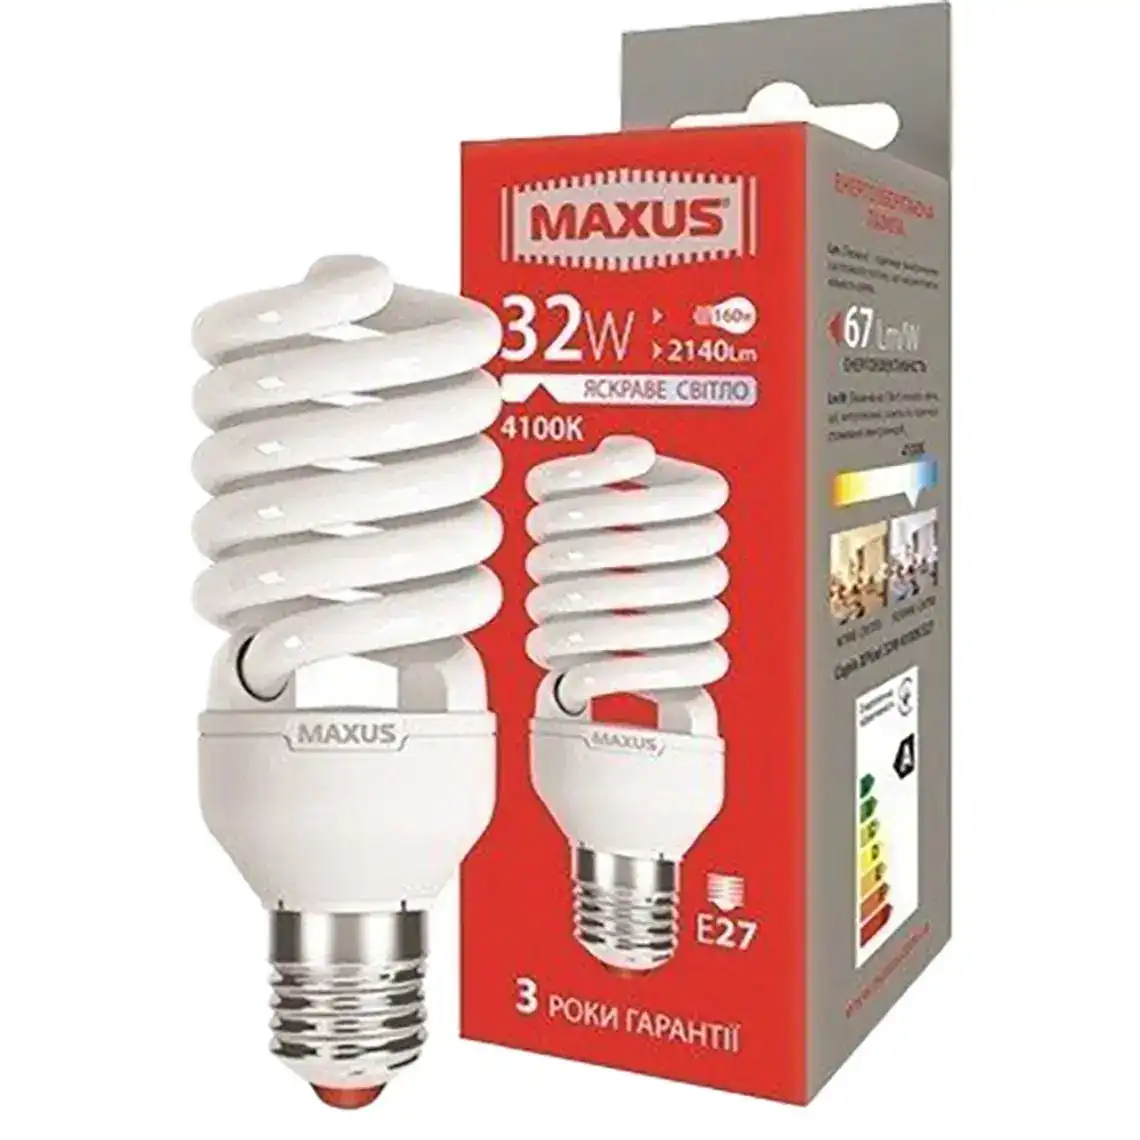 Енергозберігаюча лампа MAXUS XPiral 32W 4100K E27